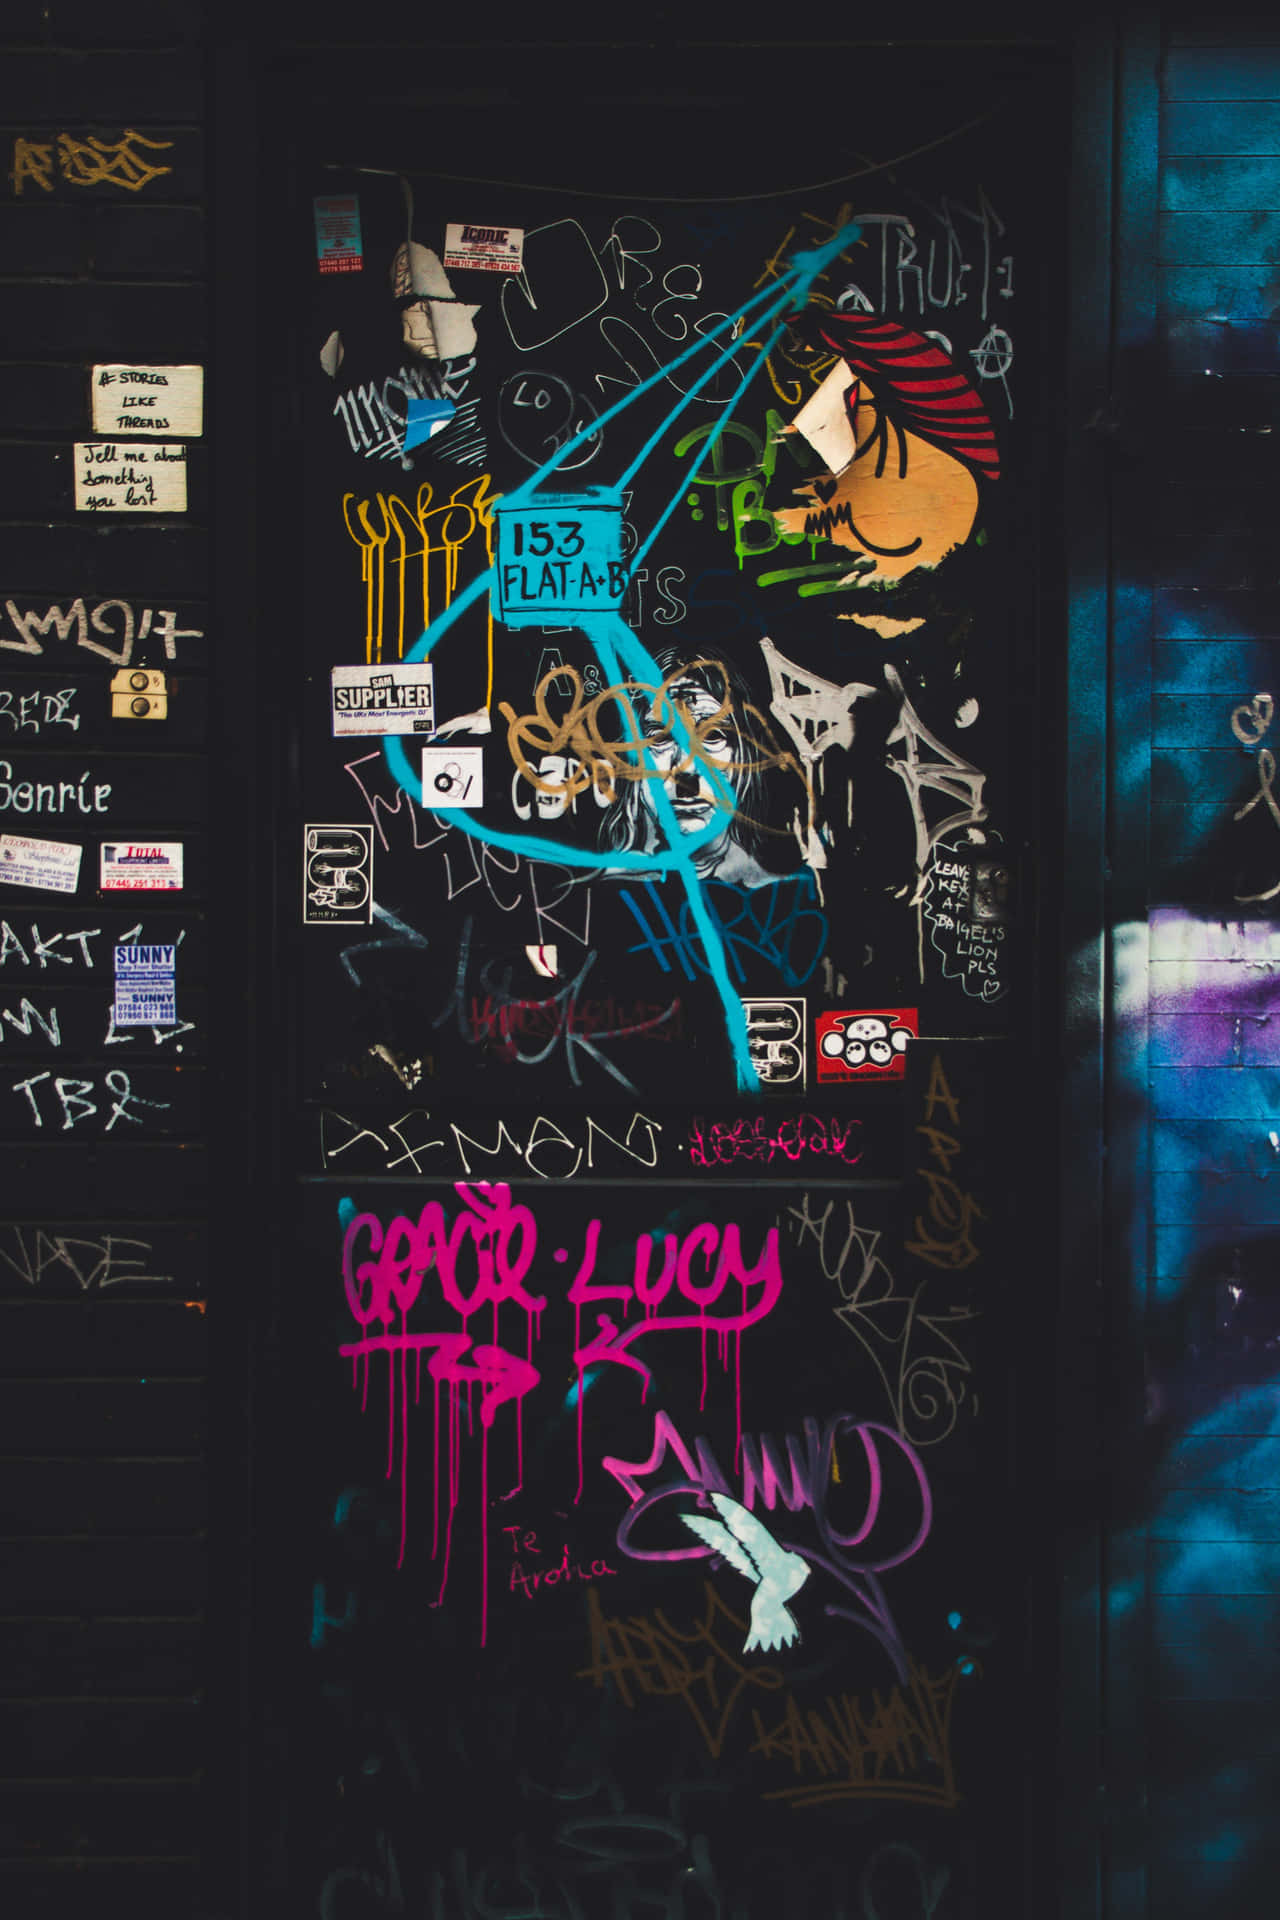 An expressive hip hop graffiti wall full of vibrancy and creativity. Wallpaper